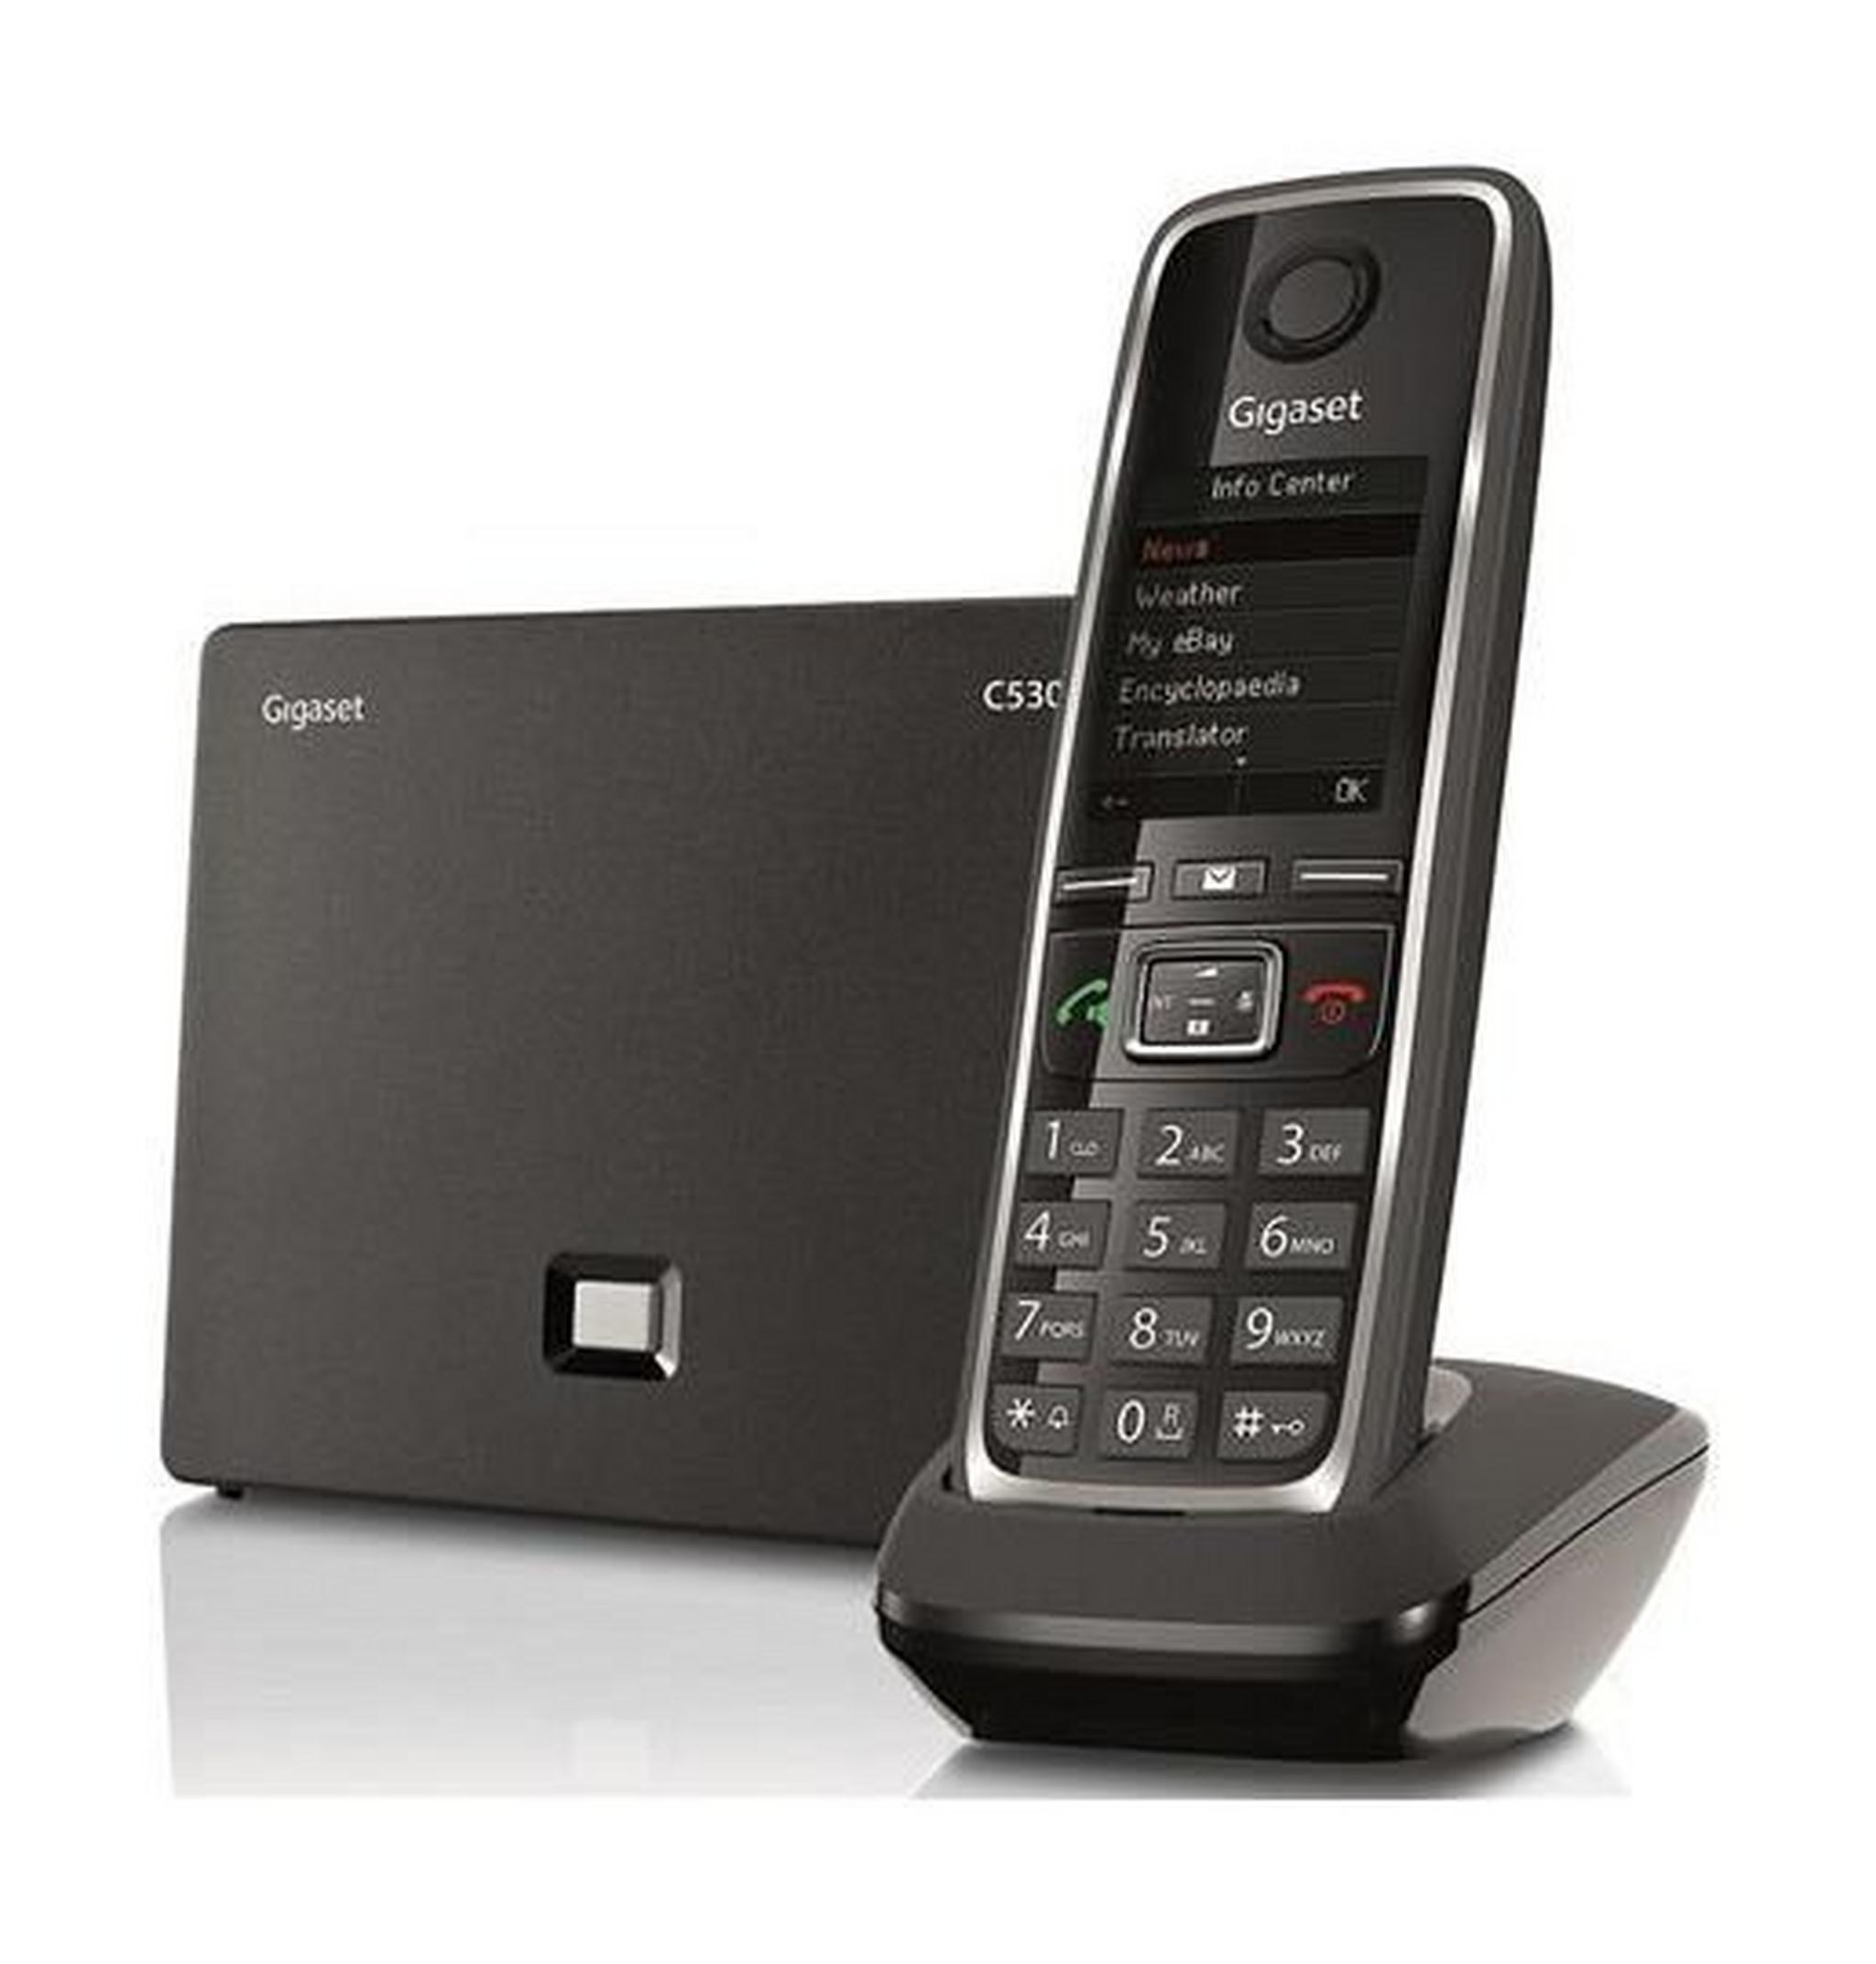 Siemens C530 Wireless Landline Telephone - Black